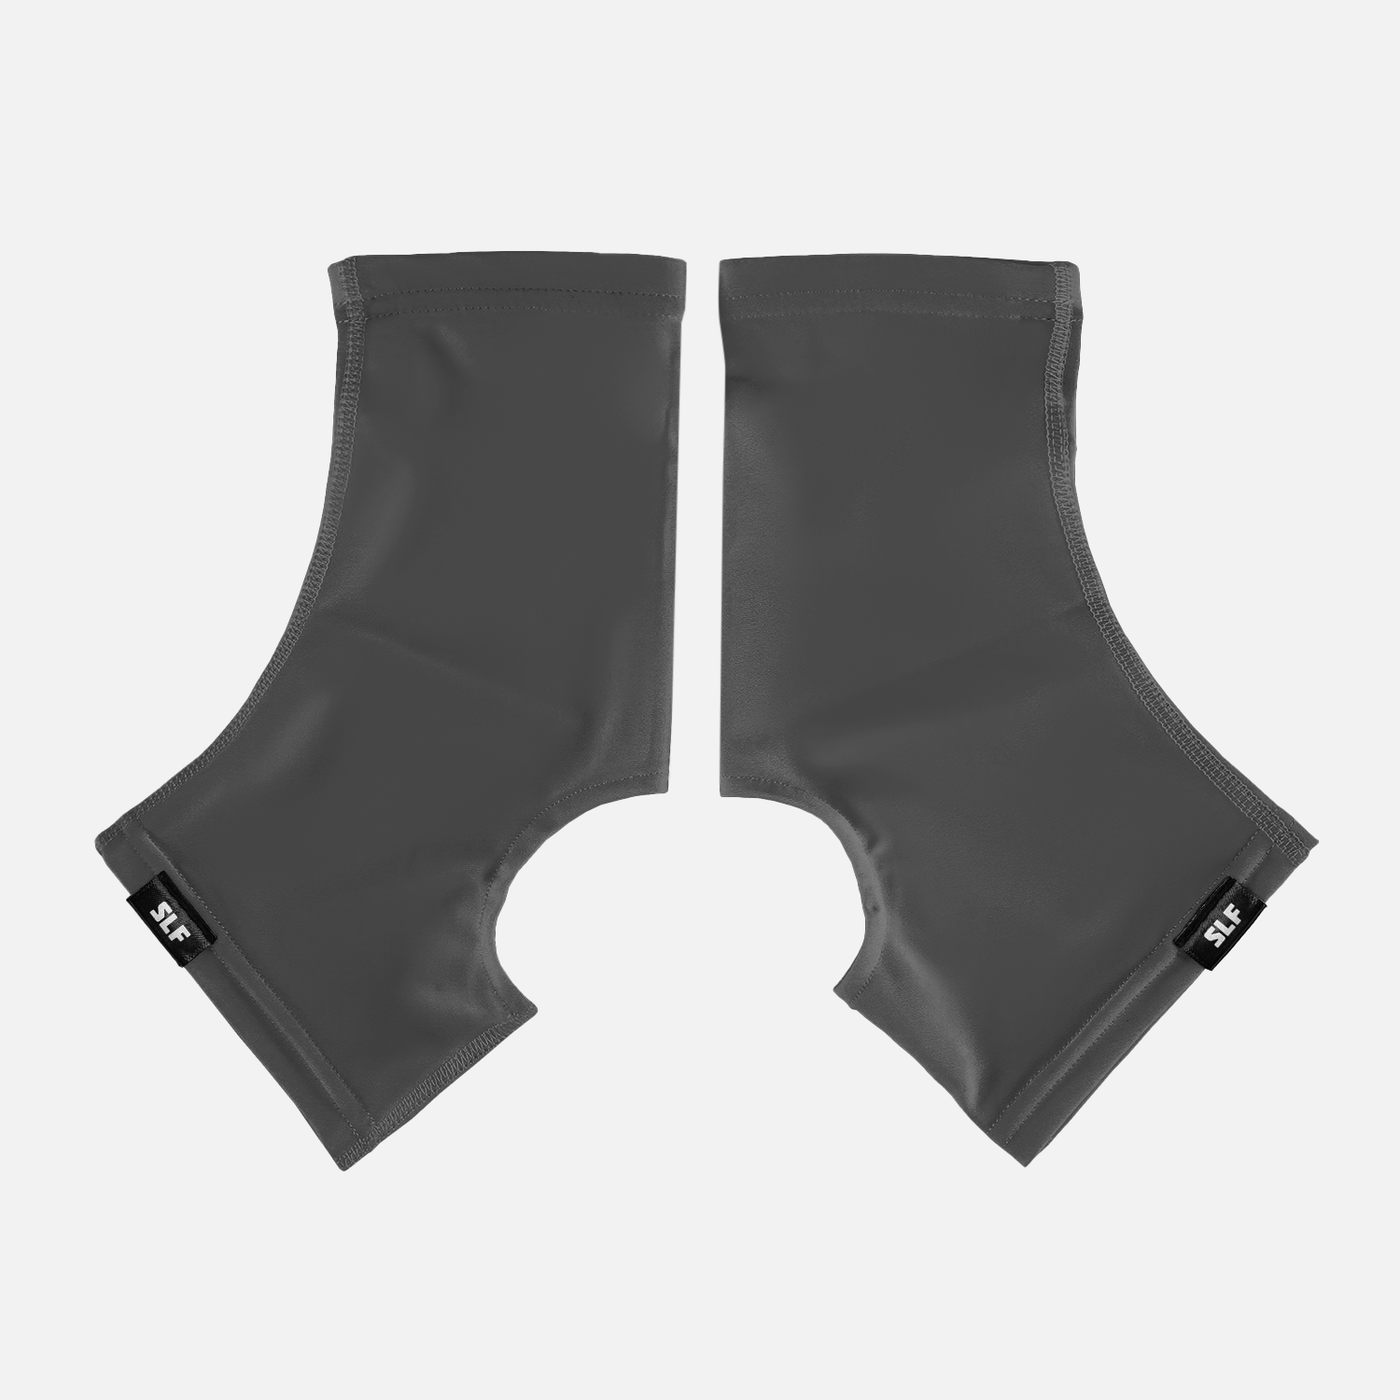 Hue Dark Gray Spats / Cleat Covers - Big